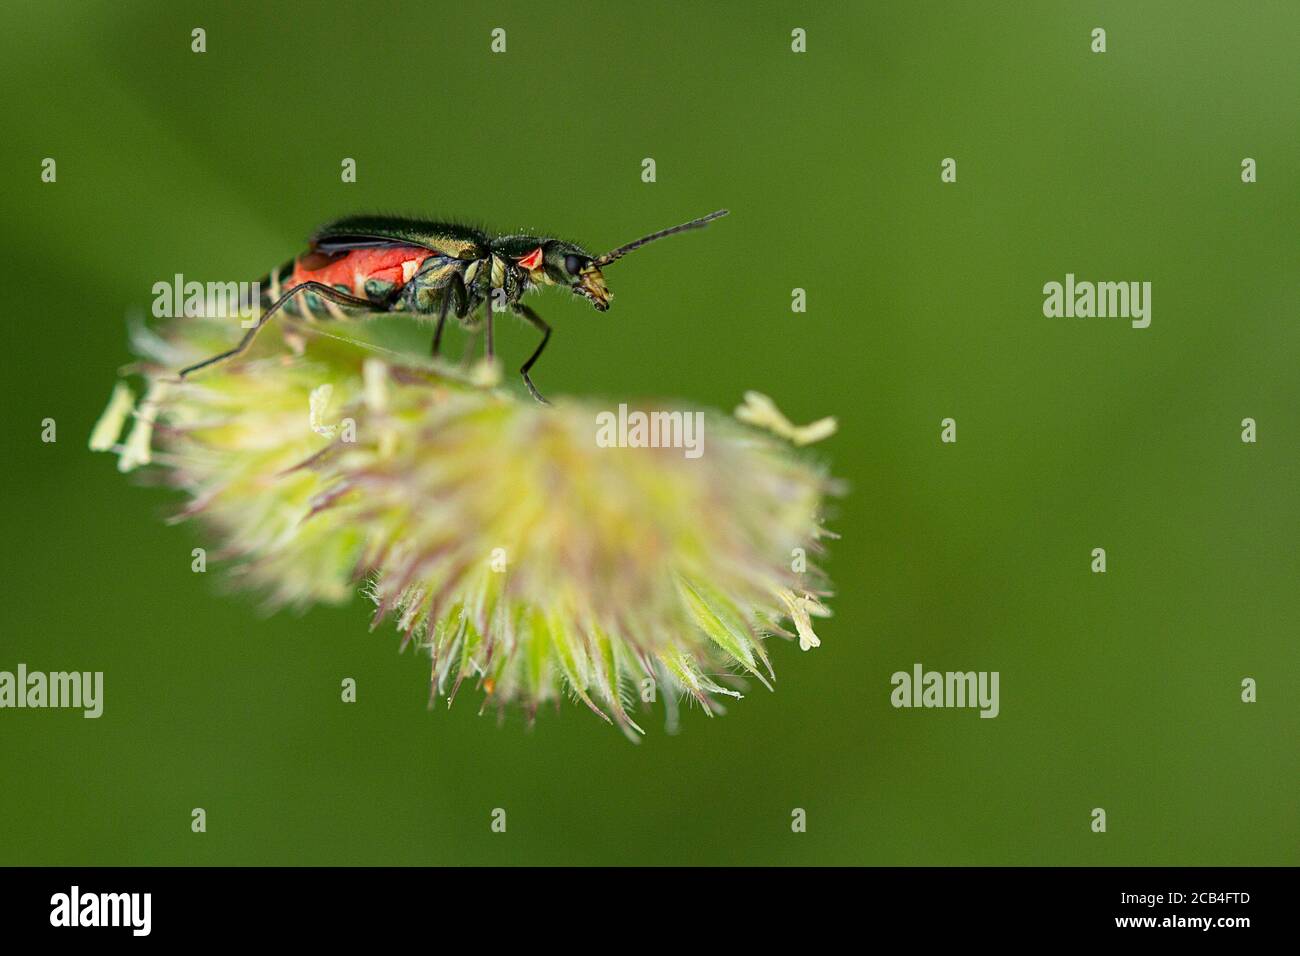 Common Malachite Beetle, Malachius bipustulatus on grass head Stock Photo